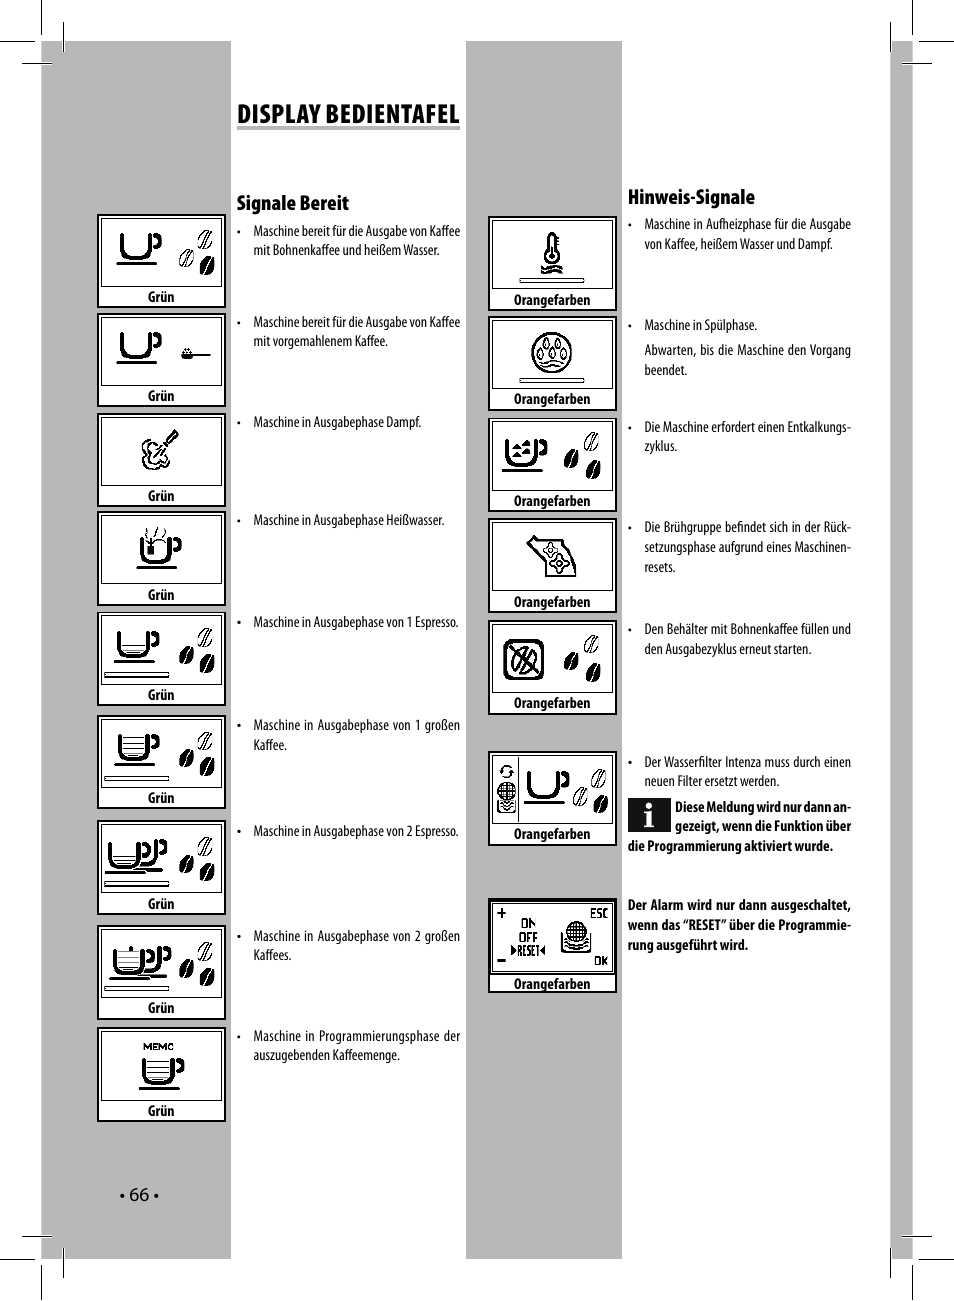 Display bedientafel, Hinweis-signale, Signale bereit | Philips Saeco Syntia  Kaffeevollautomat User Manual | Page 66 / 96 | Original mode